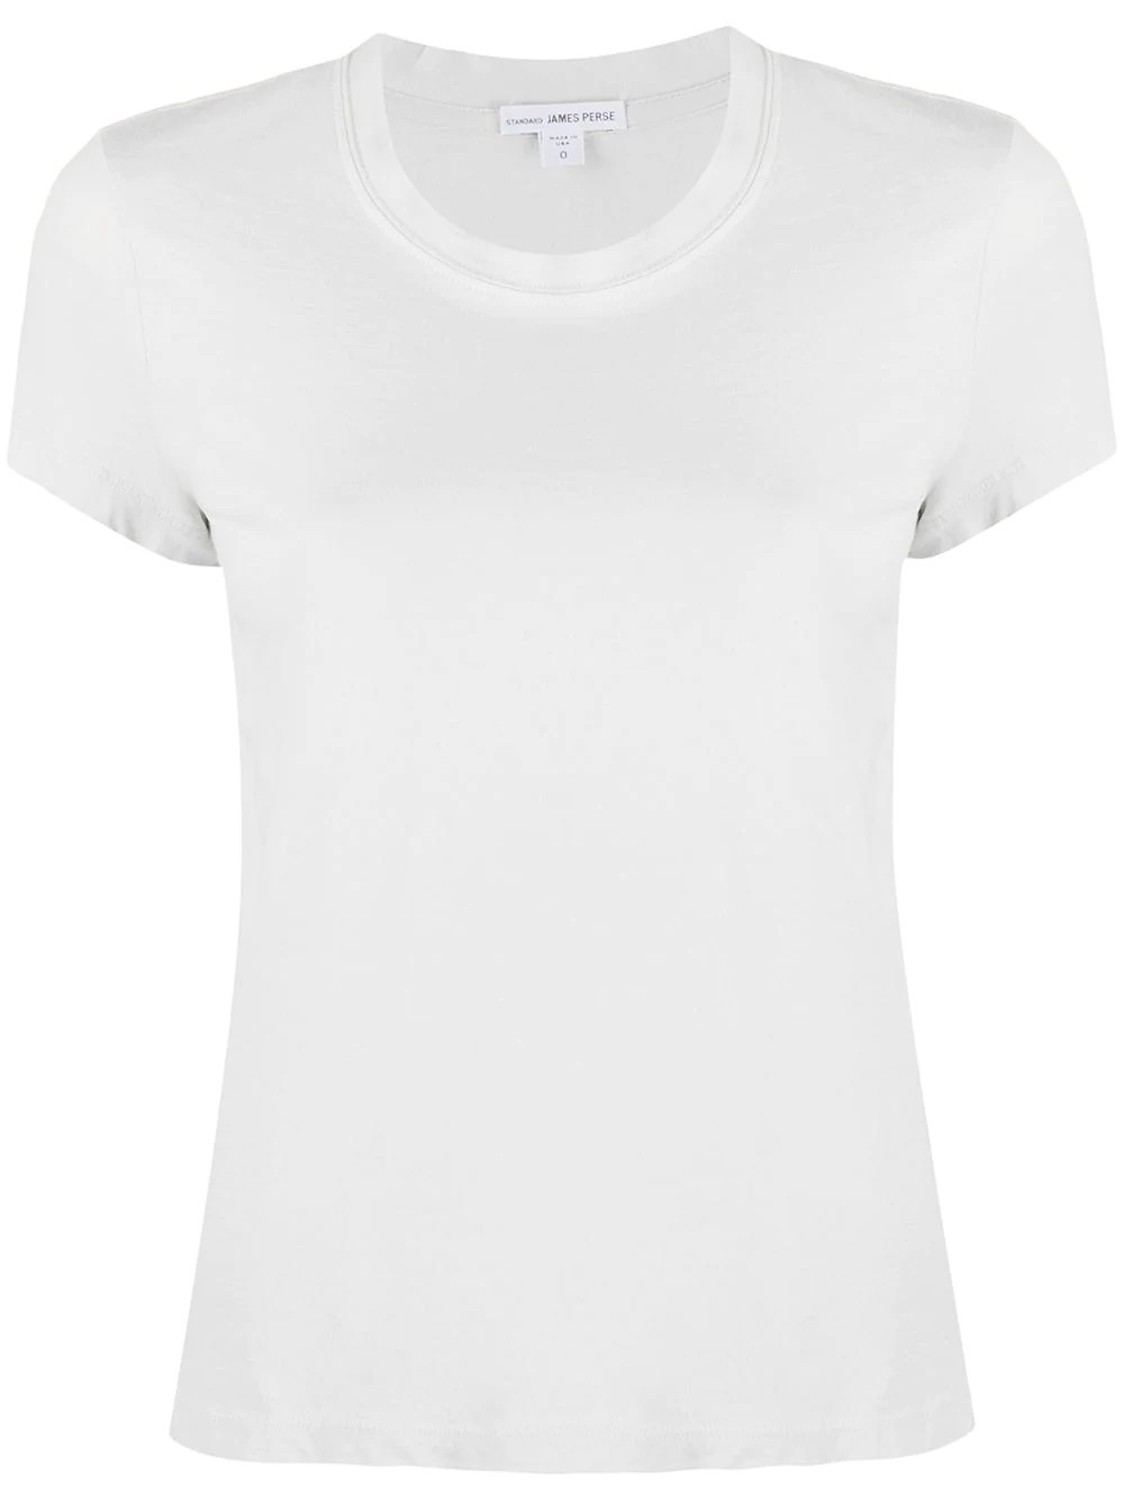 shop James Perse  T-shirts: T-shirts James Perse, girocollo, manica corta, fit regolare.

Composizione: 100% cotone. number 2057